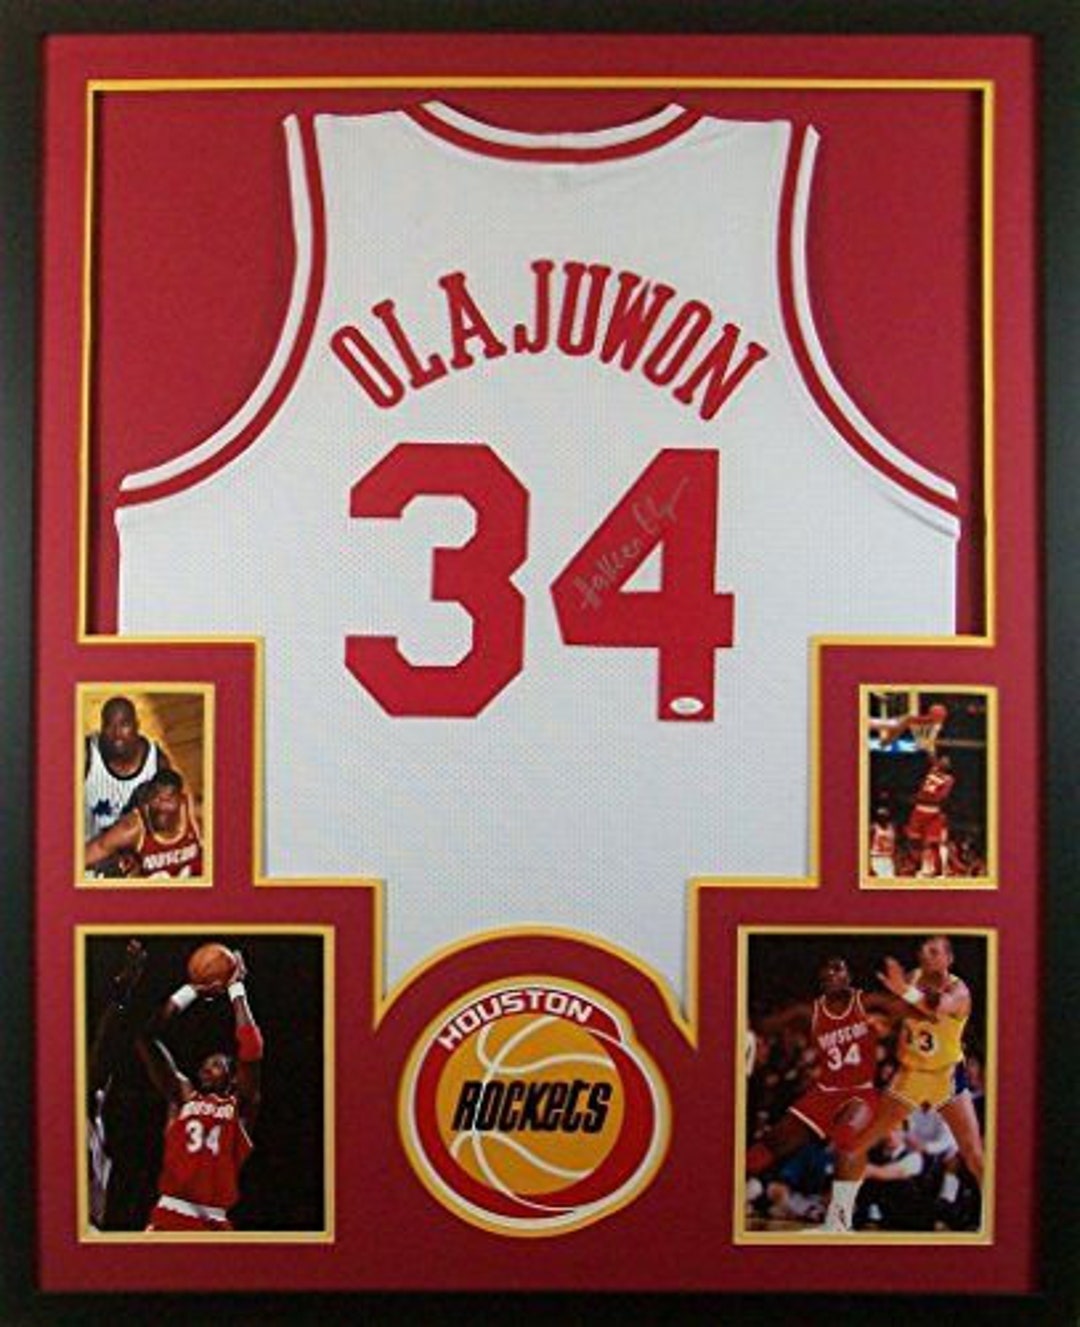 John Wall Autographed Houston Custom Basketball Jersey - JSA COA